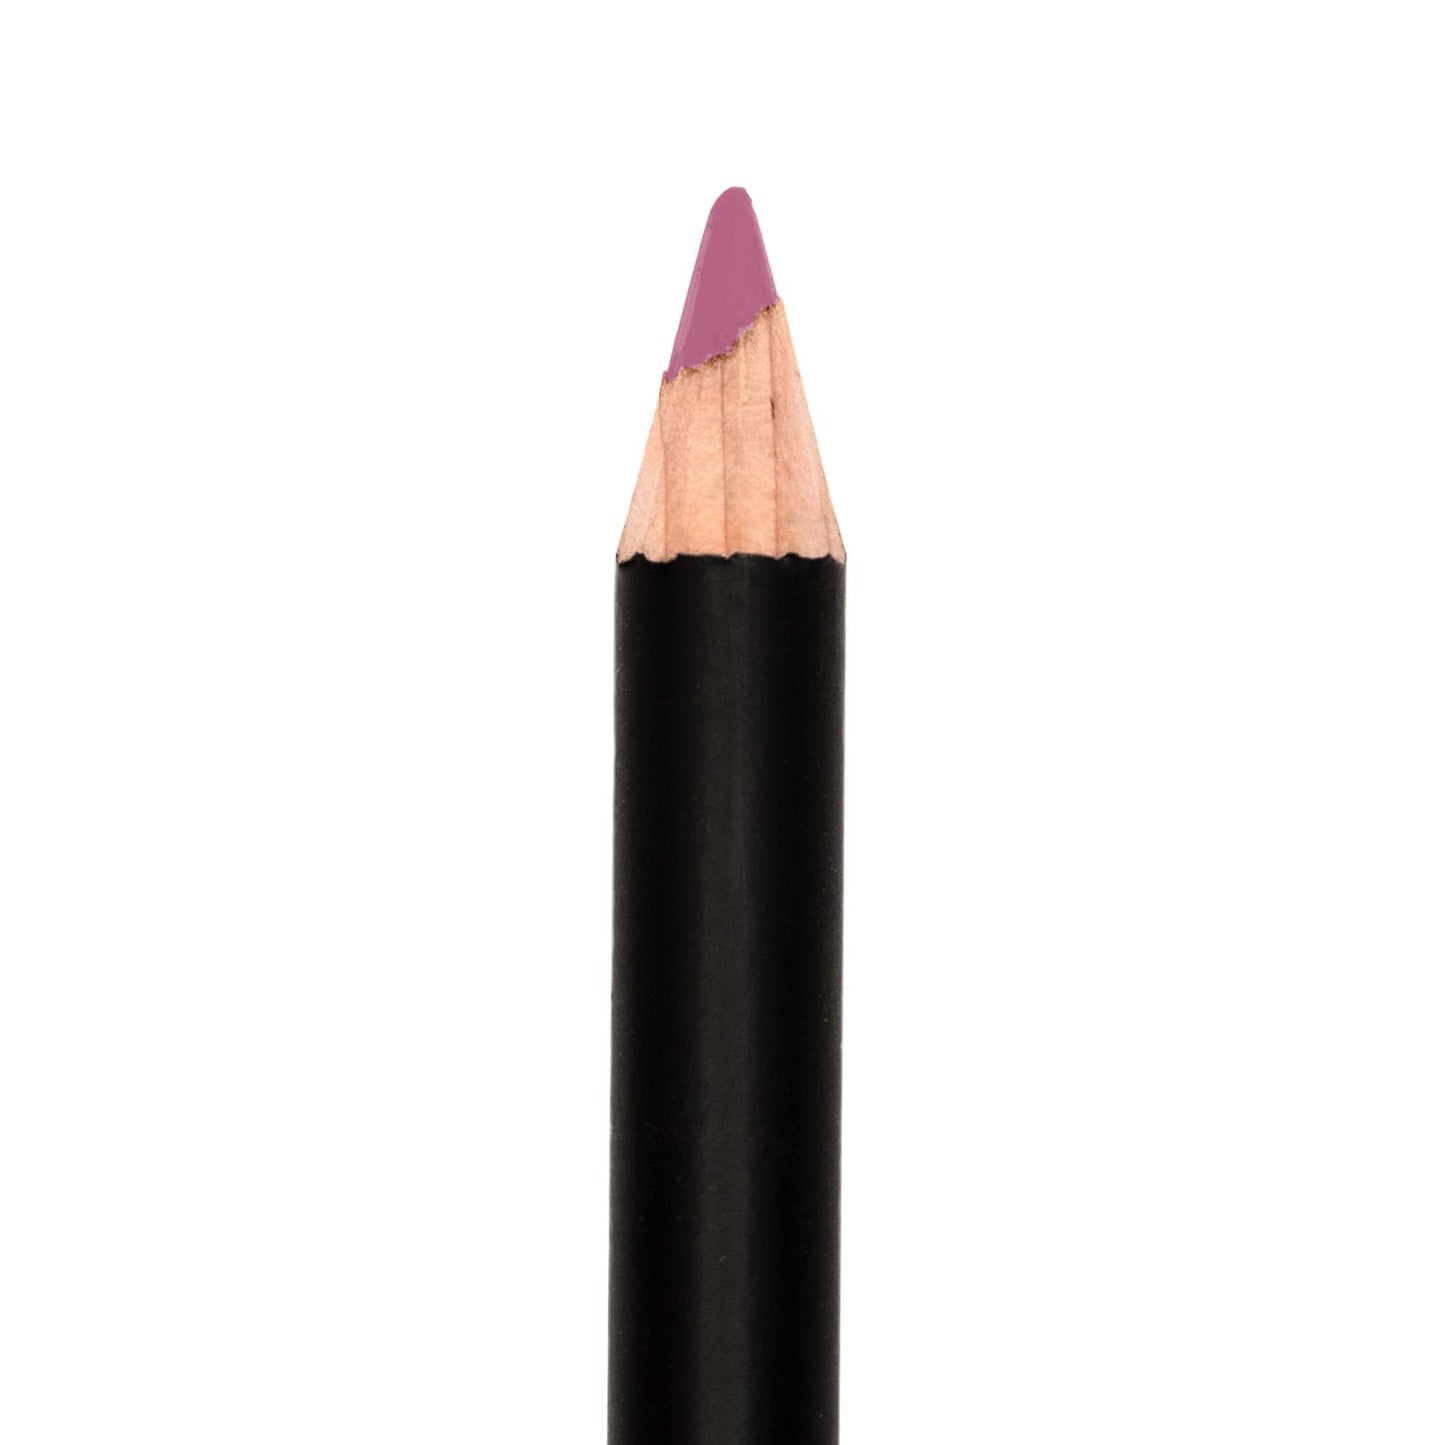 Lip Pencil - Bare - theshithotcompany